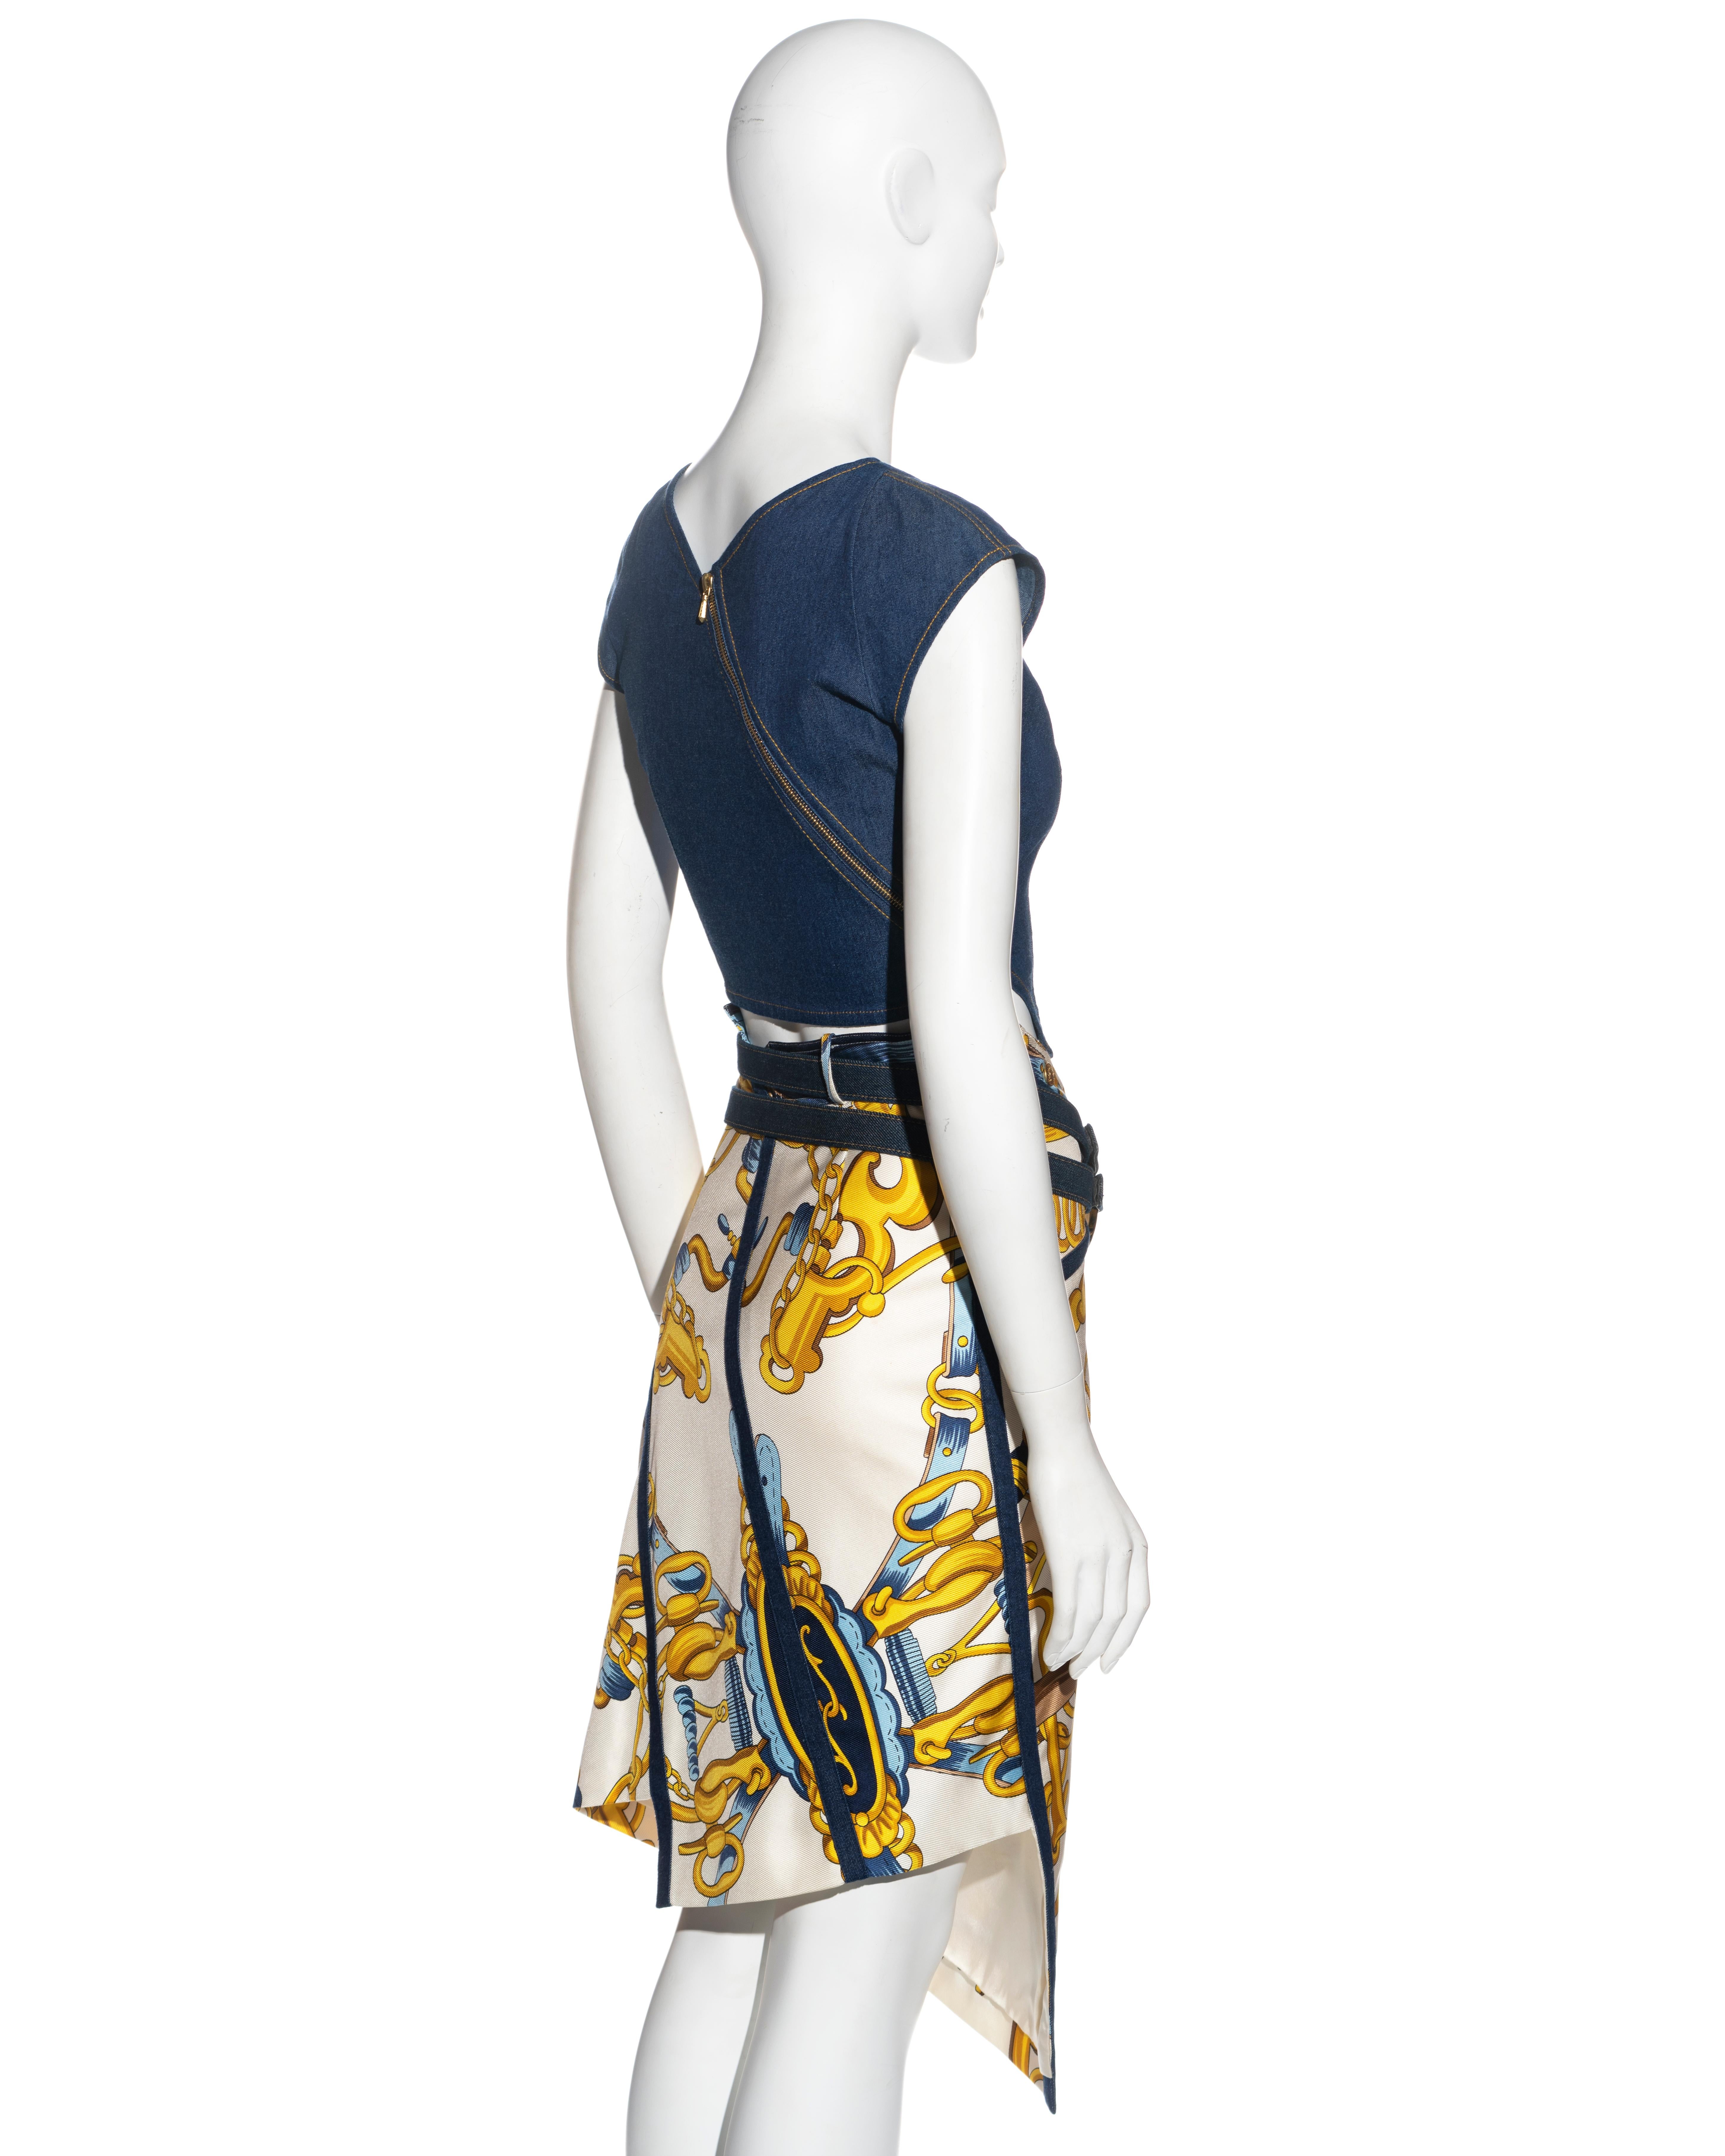 Christian Dior by John Galliano skirt, top and belt ensemble, ss 2000 3